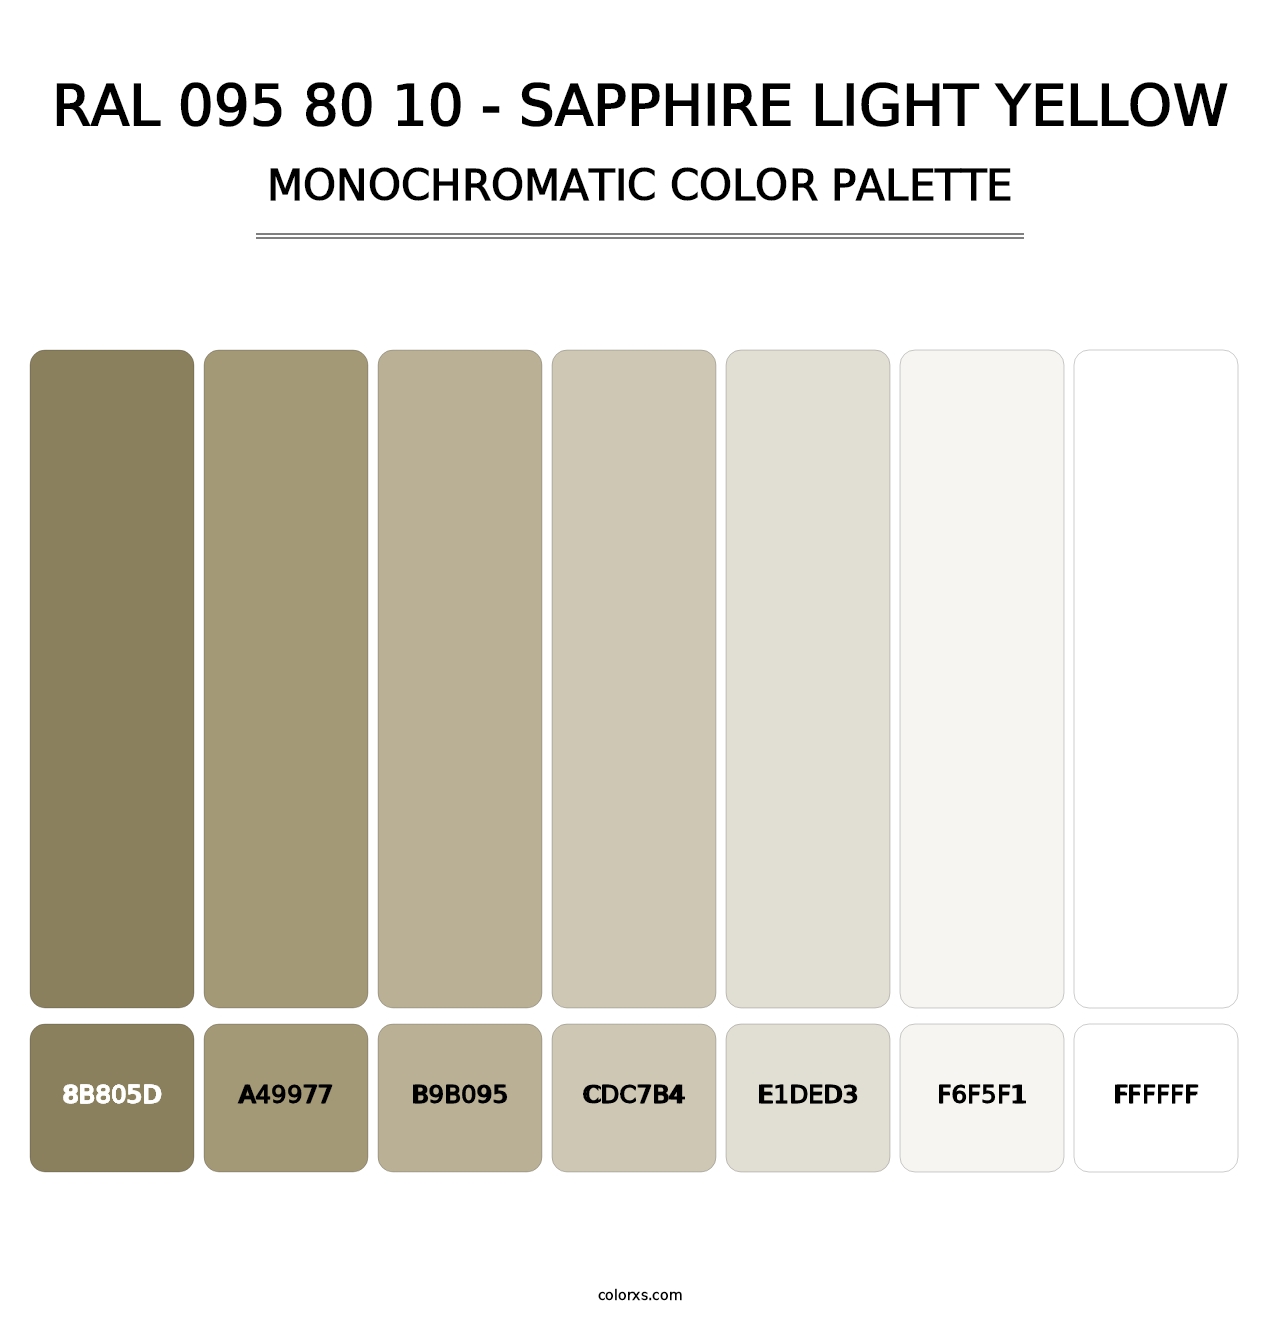 RAL 095 80 10 - Sapphire Light Yellow - Monochromatic Color Palette